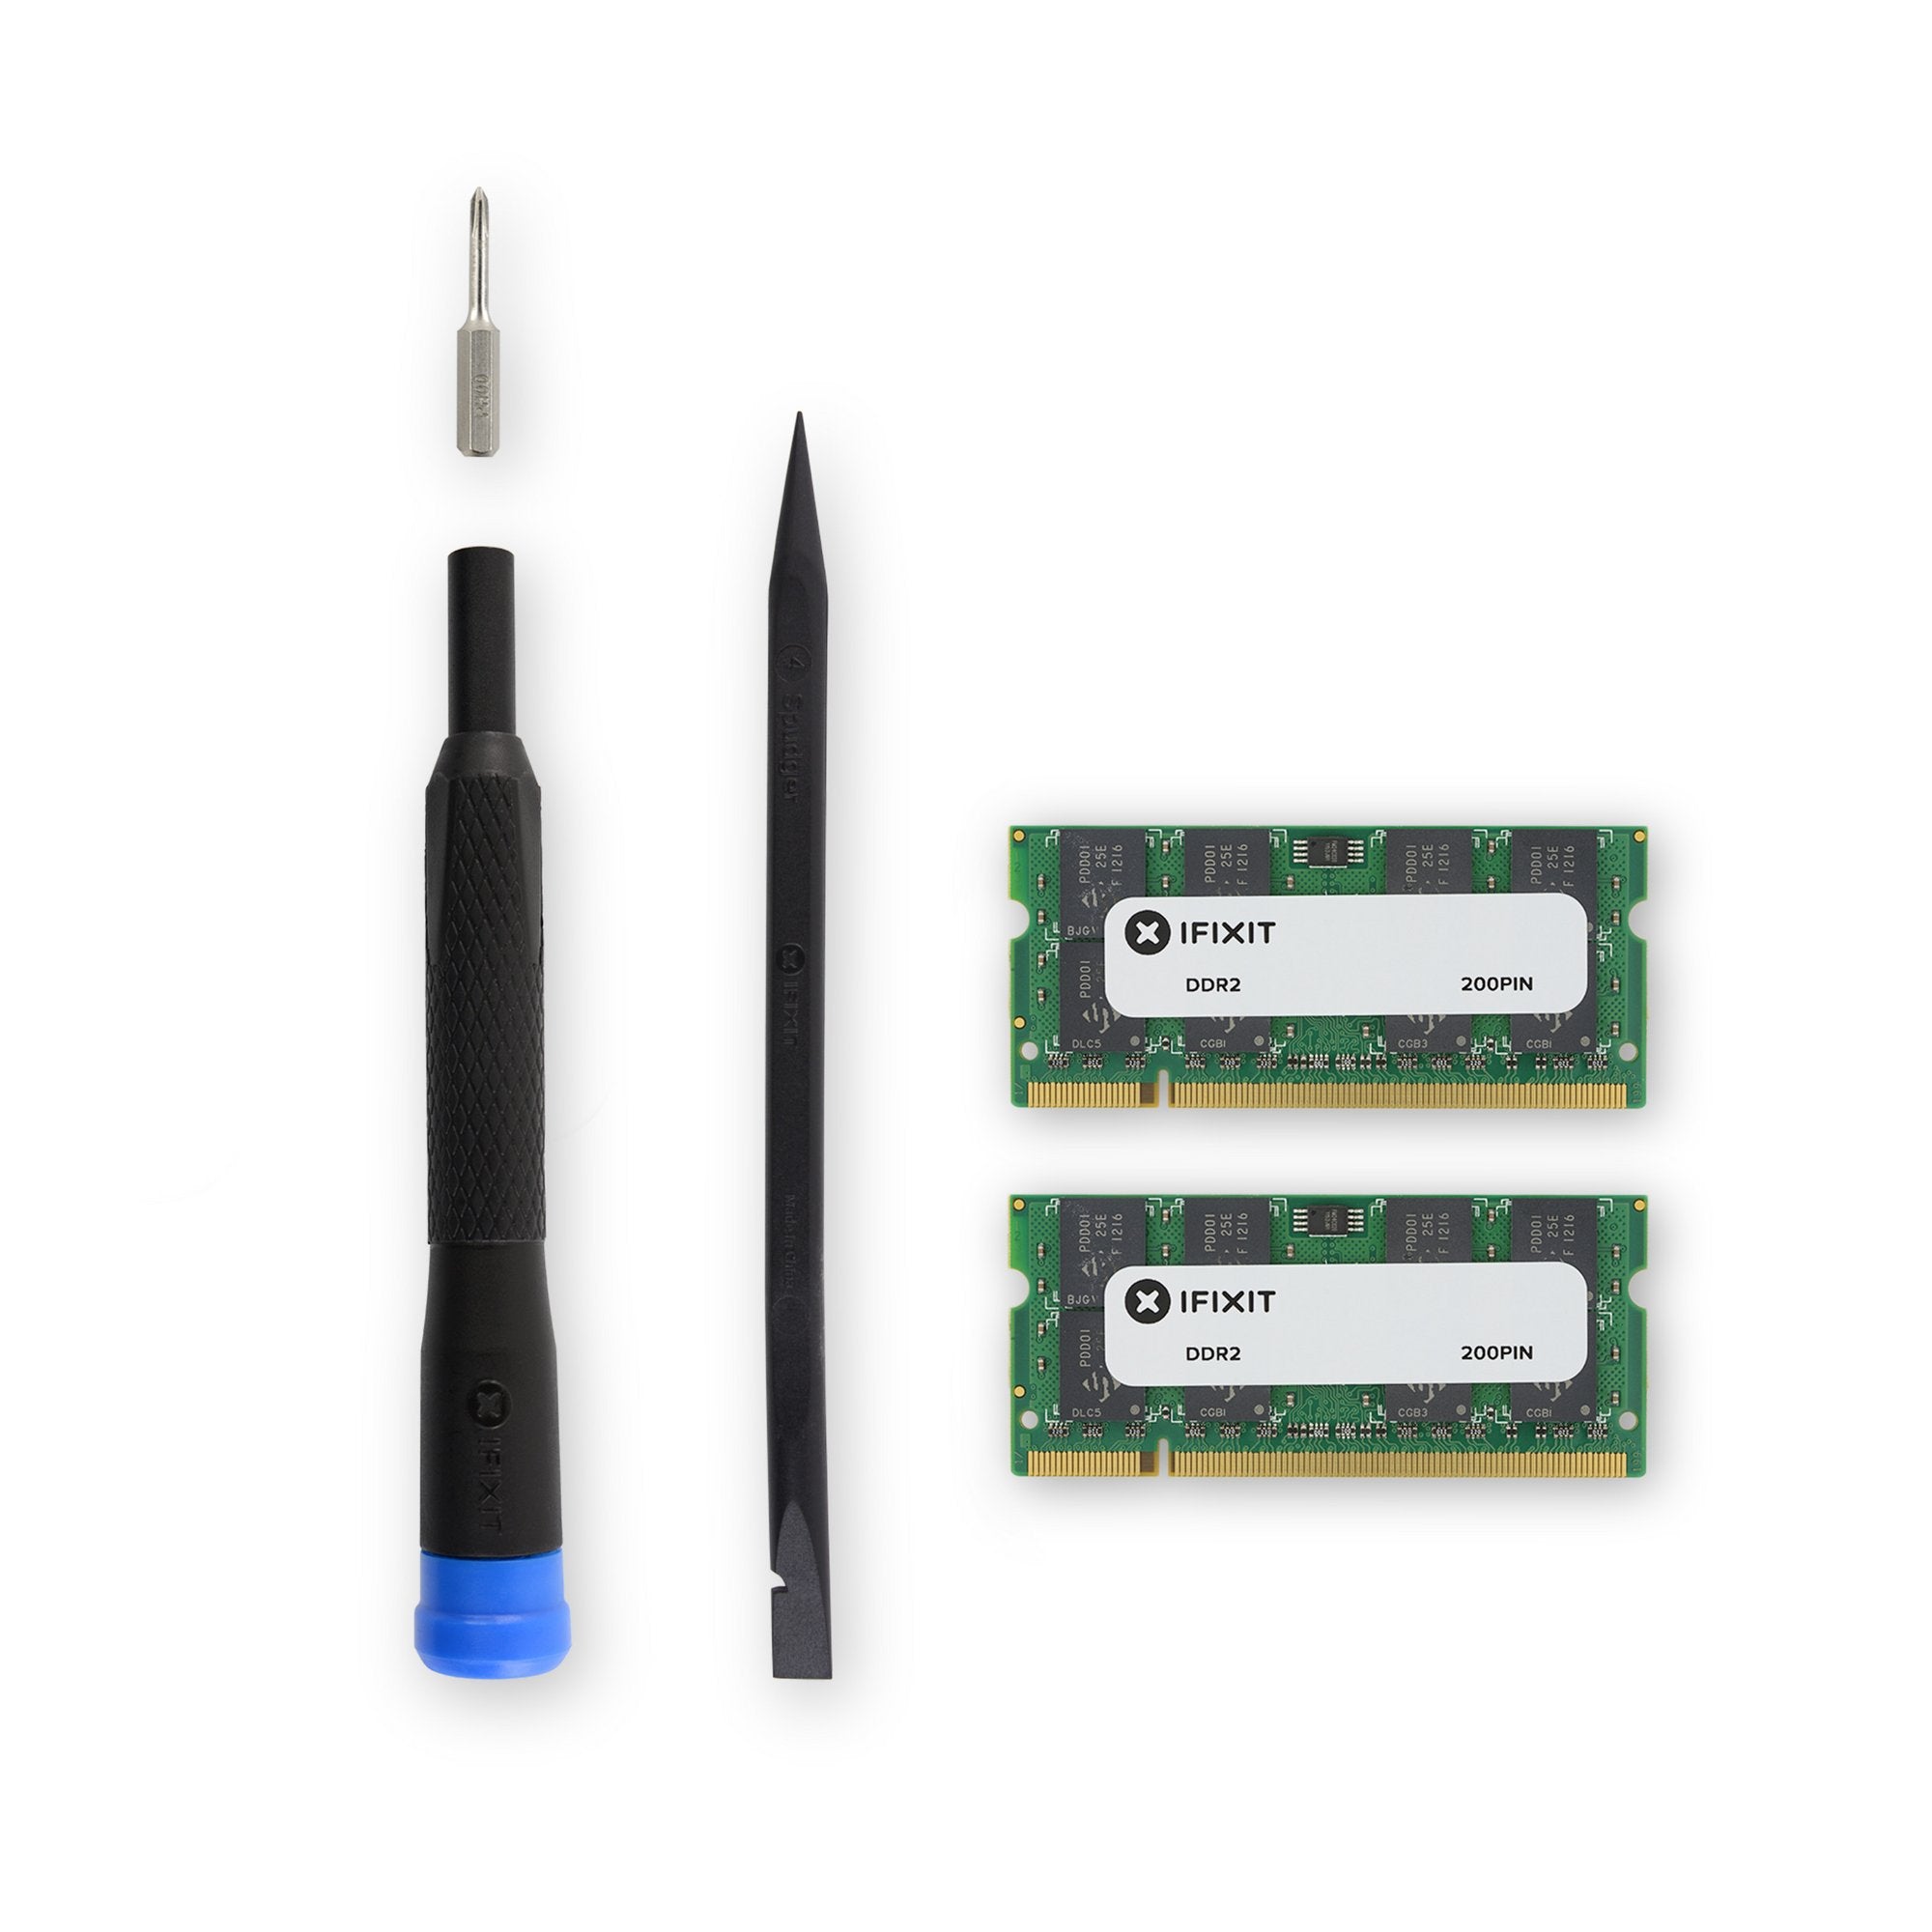 MacBook 13" (Mid 2009) Memory Maxxer RAM Upgrade Kit